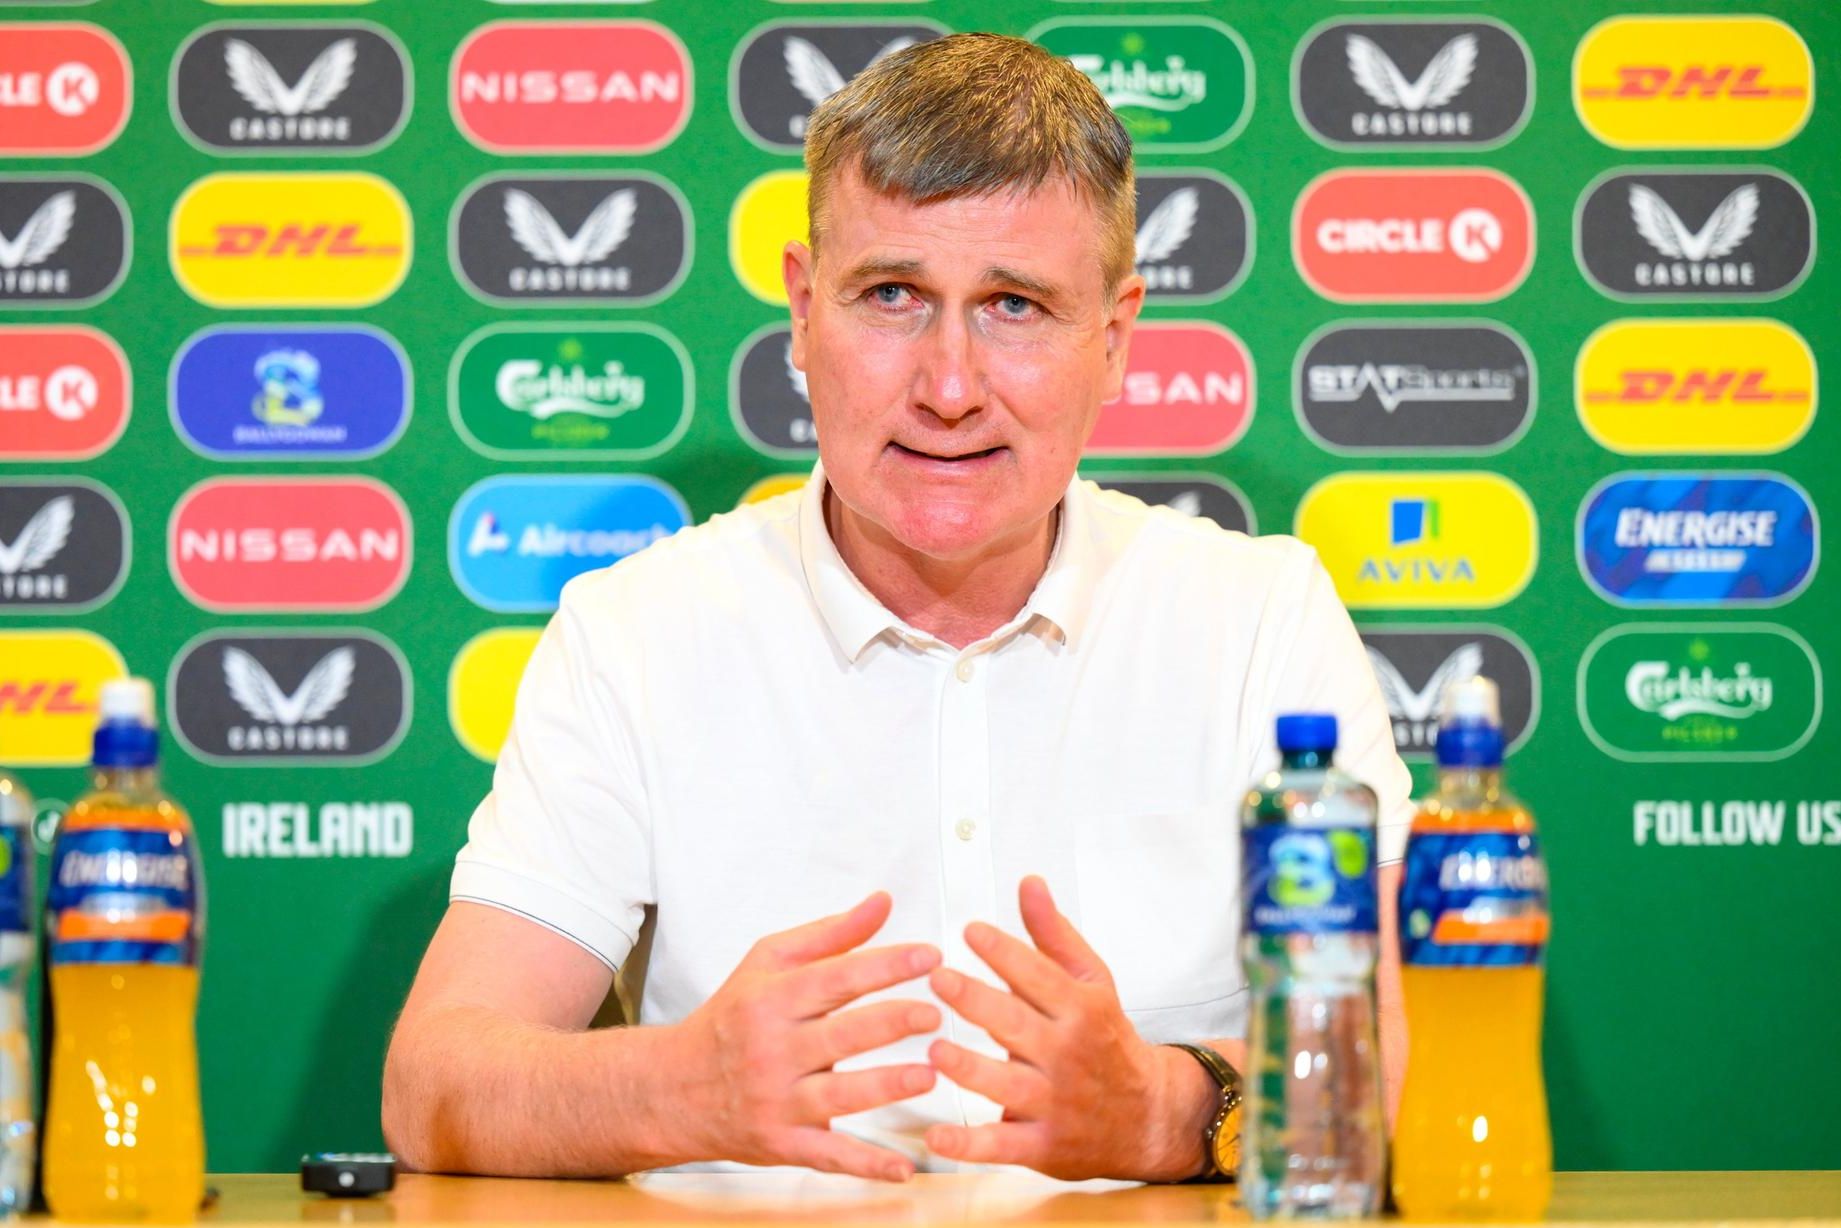 Stephen Kenny backs misfiring strikers to produce for Ireland despite struggles at club level